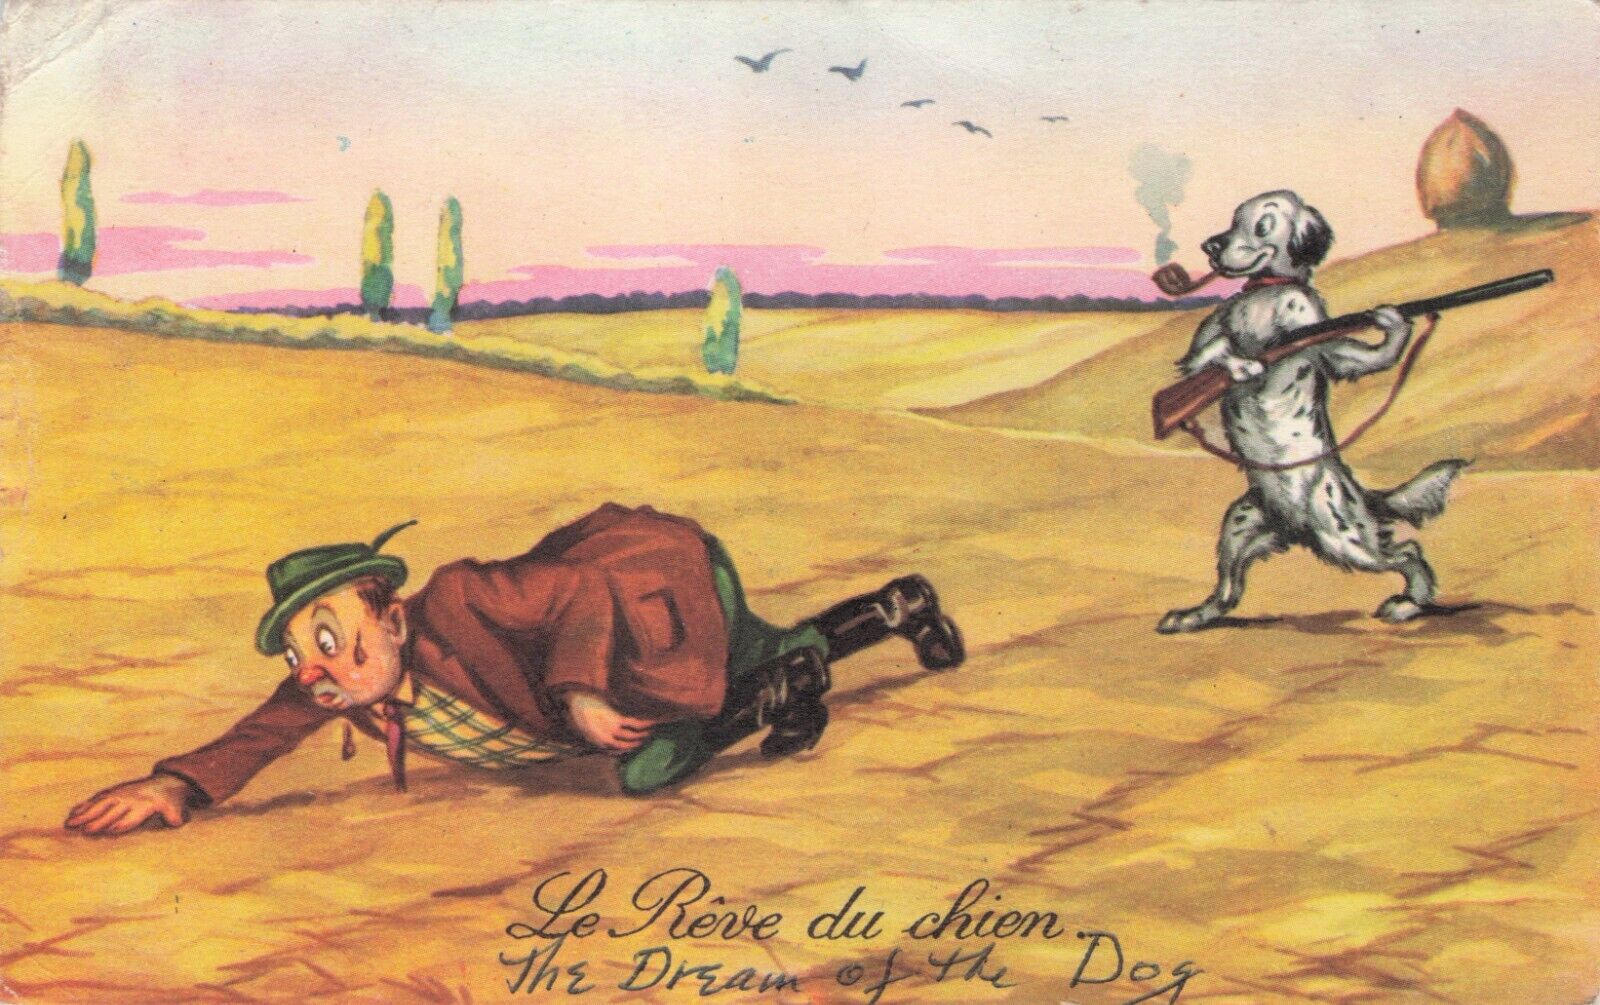 Artist card Boris O’Klein? The Dream of the Dog on 2 Legs Comic Postcard c. 1957